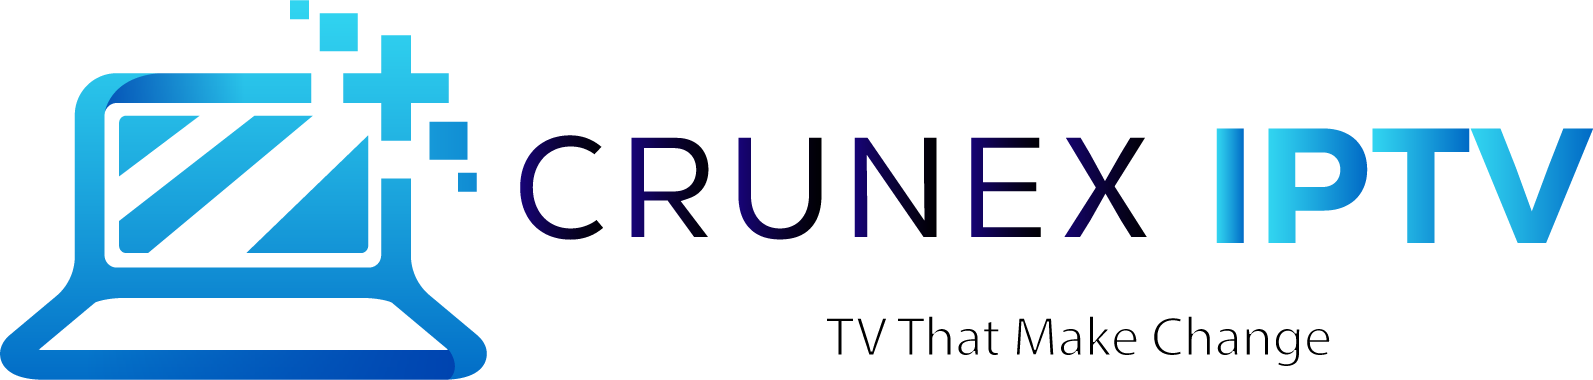 Crunex IPTV